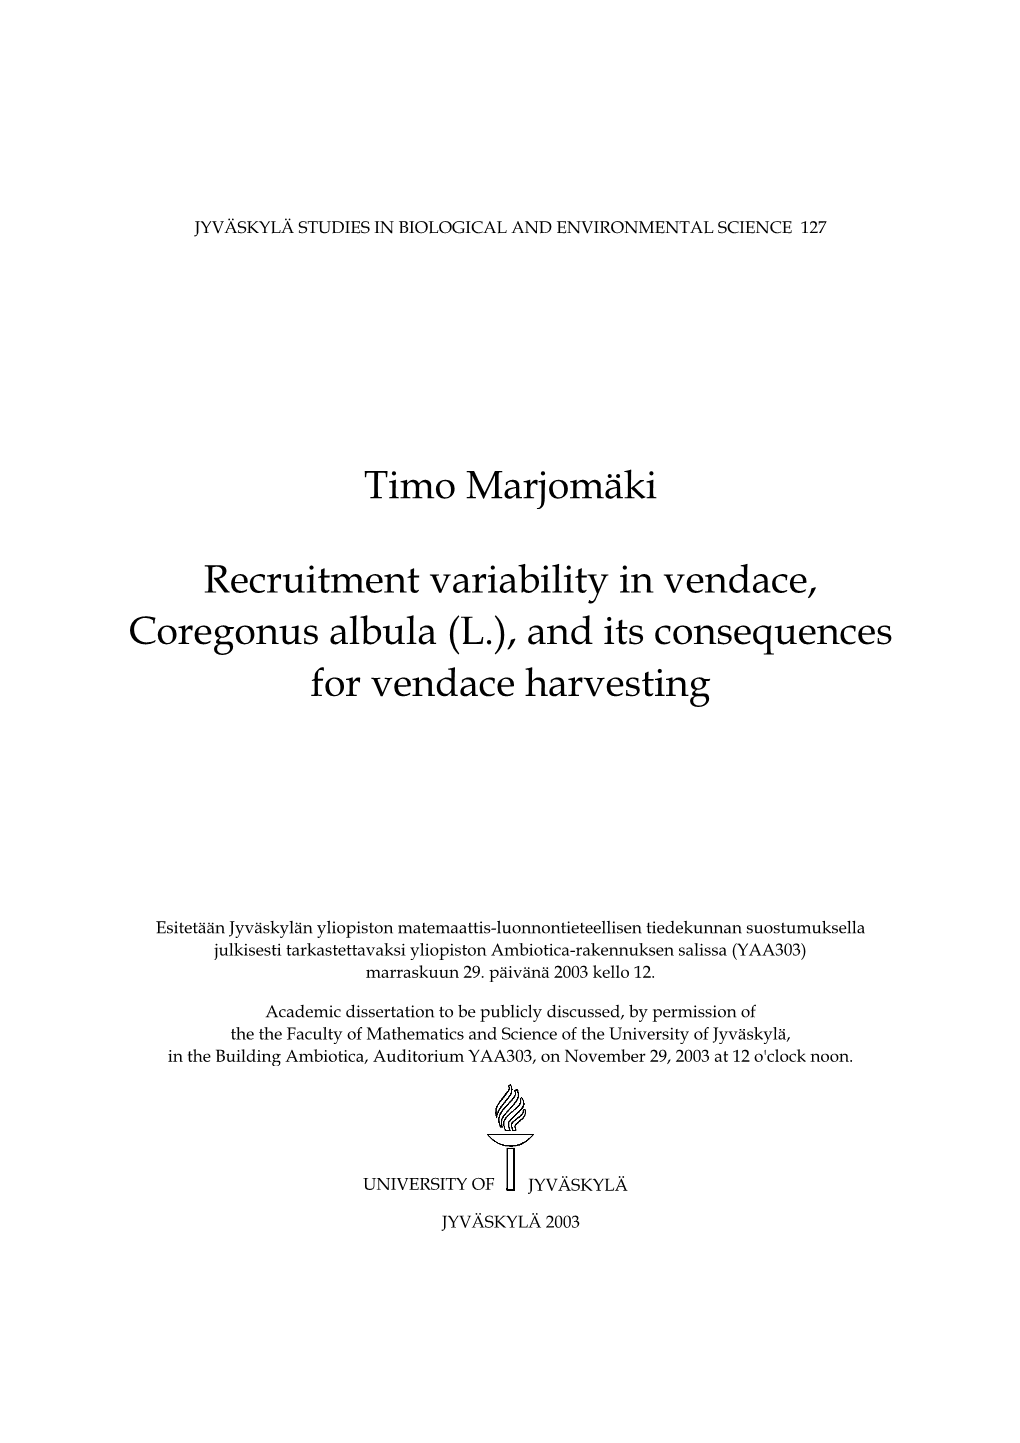 Timo Marjomäki Recruitment Variability in Vendace, Coregonus